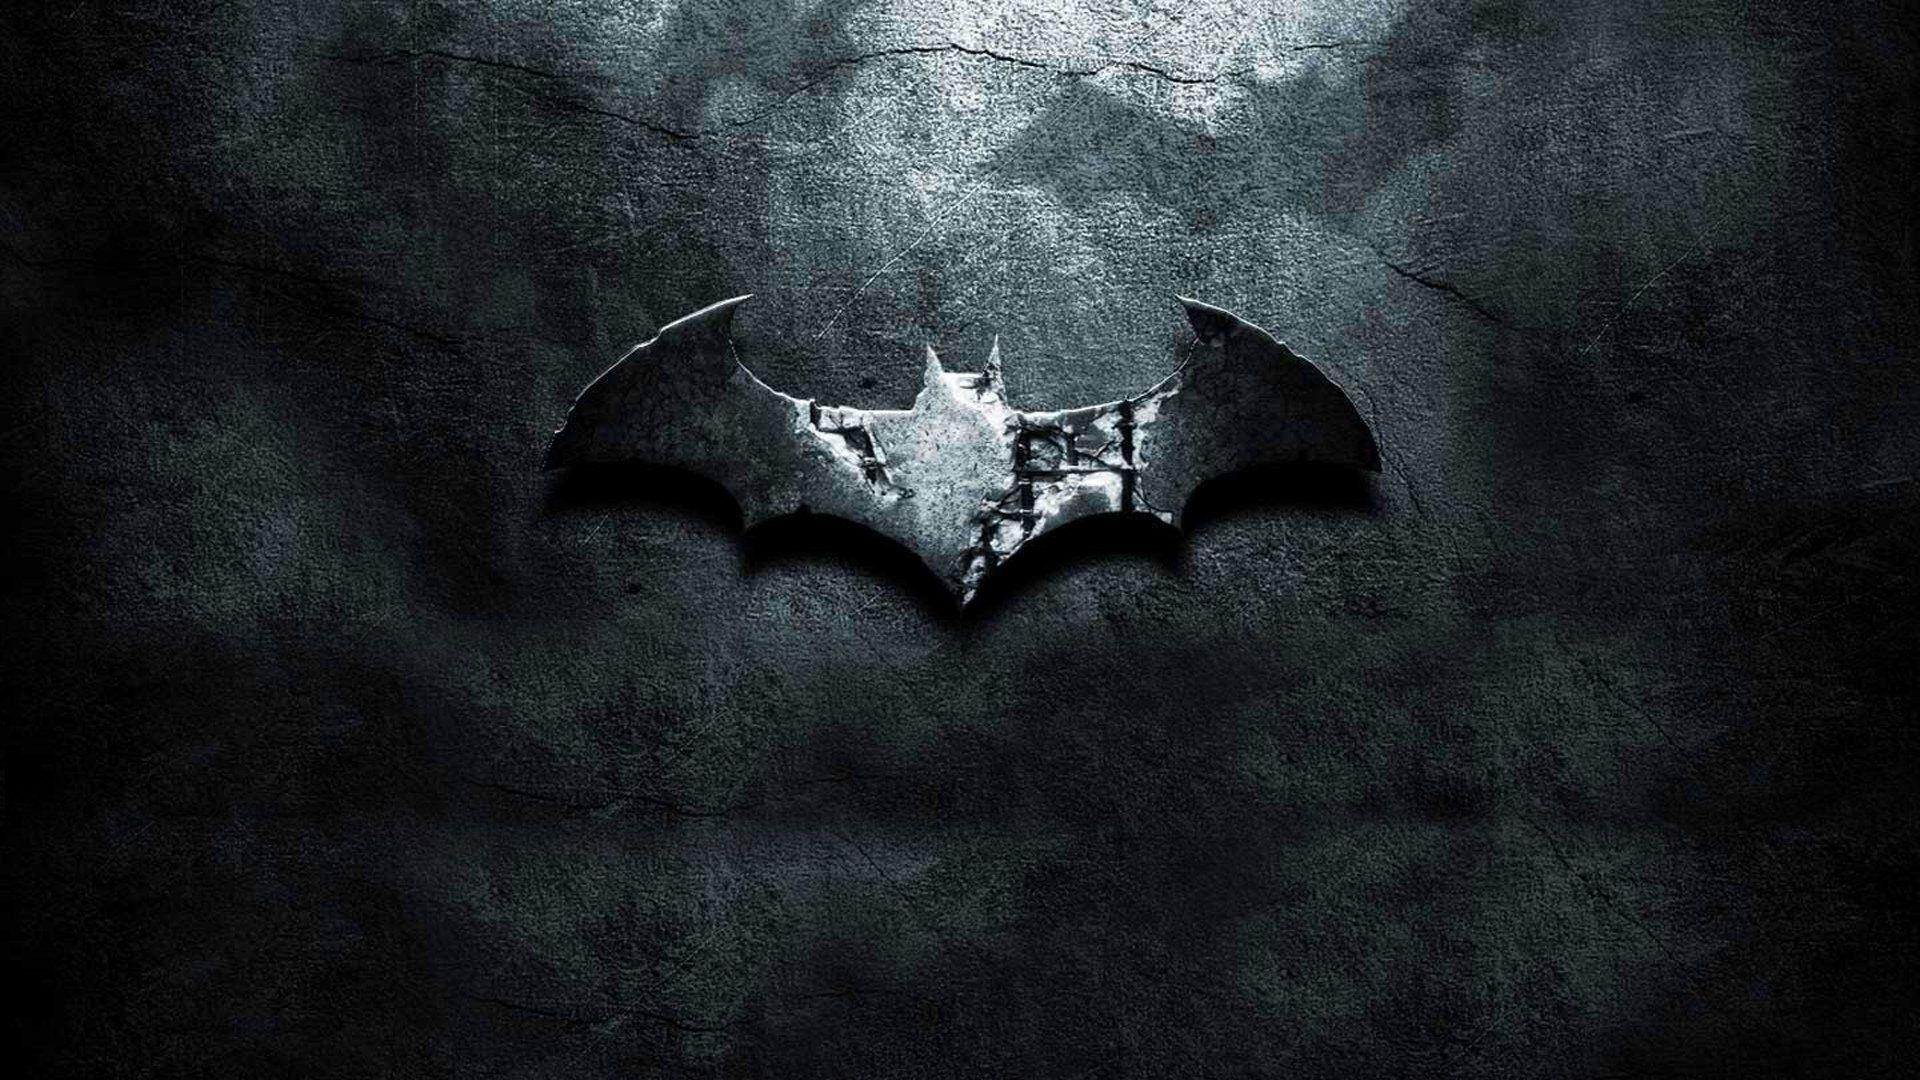 Logos For > Bat Symbol Wallpaper